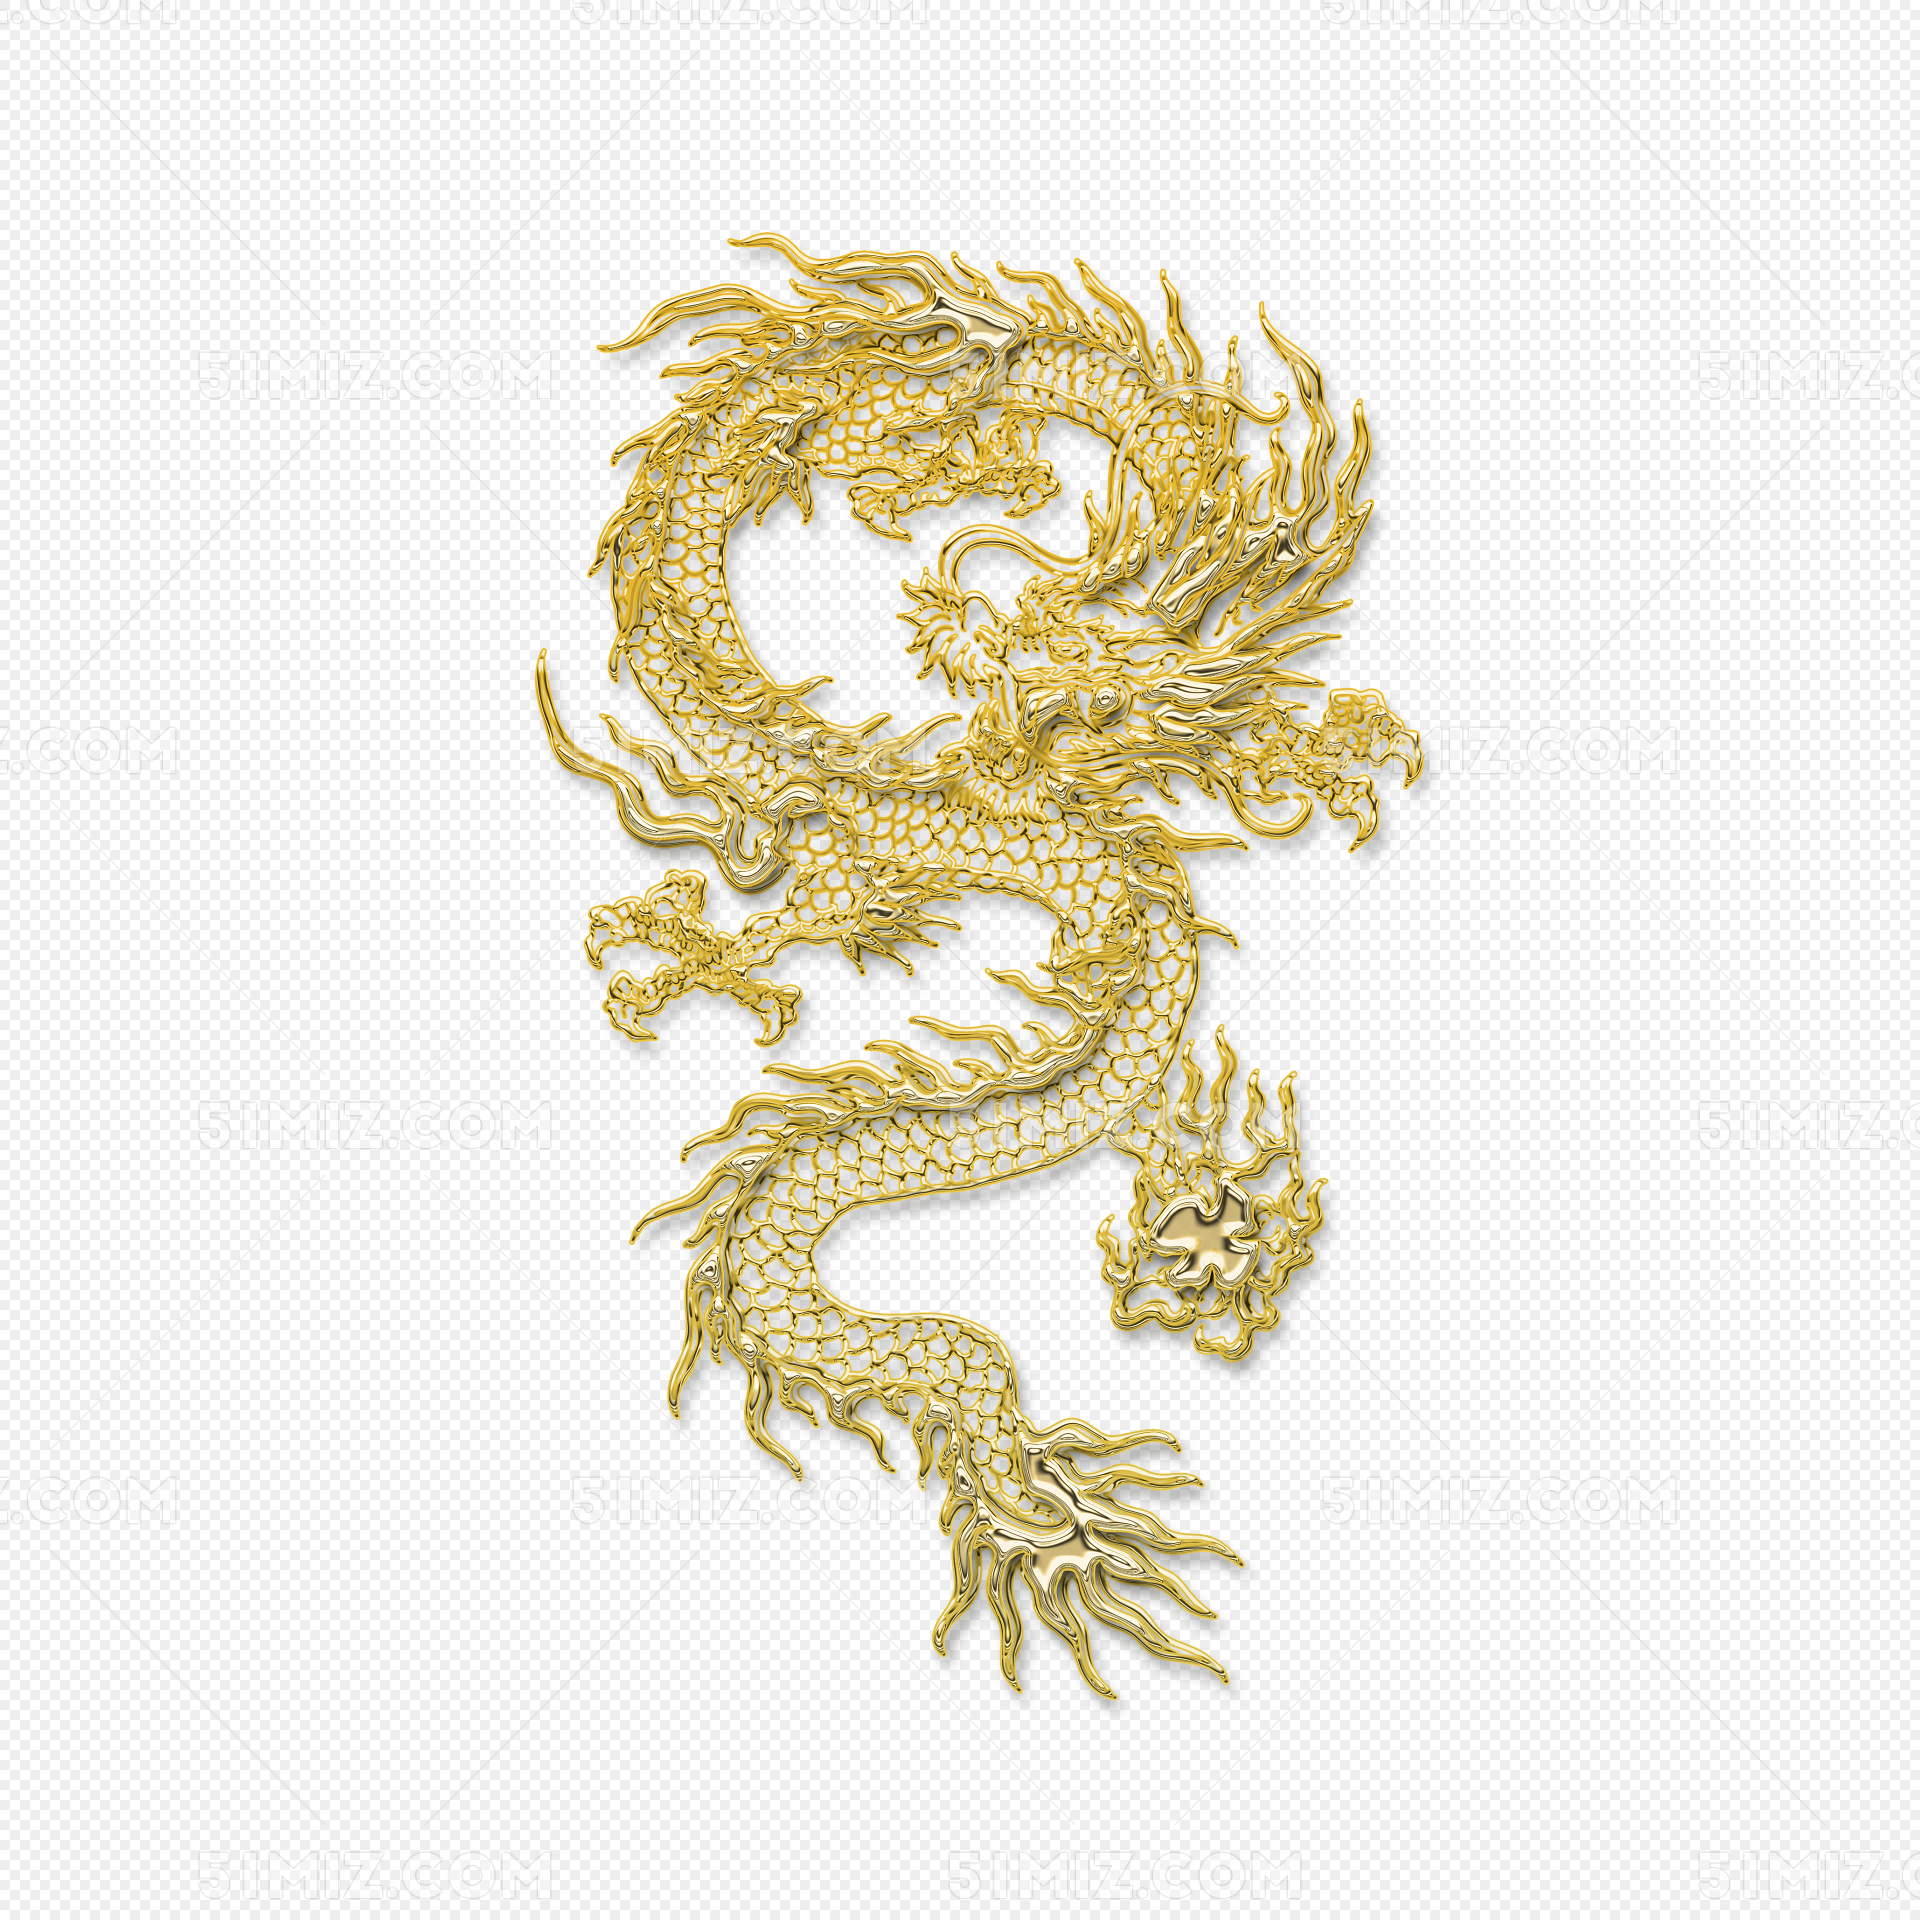 Golden dragon png image_picture free download 400257149_lovepik.com